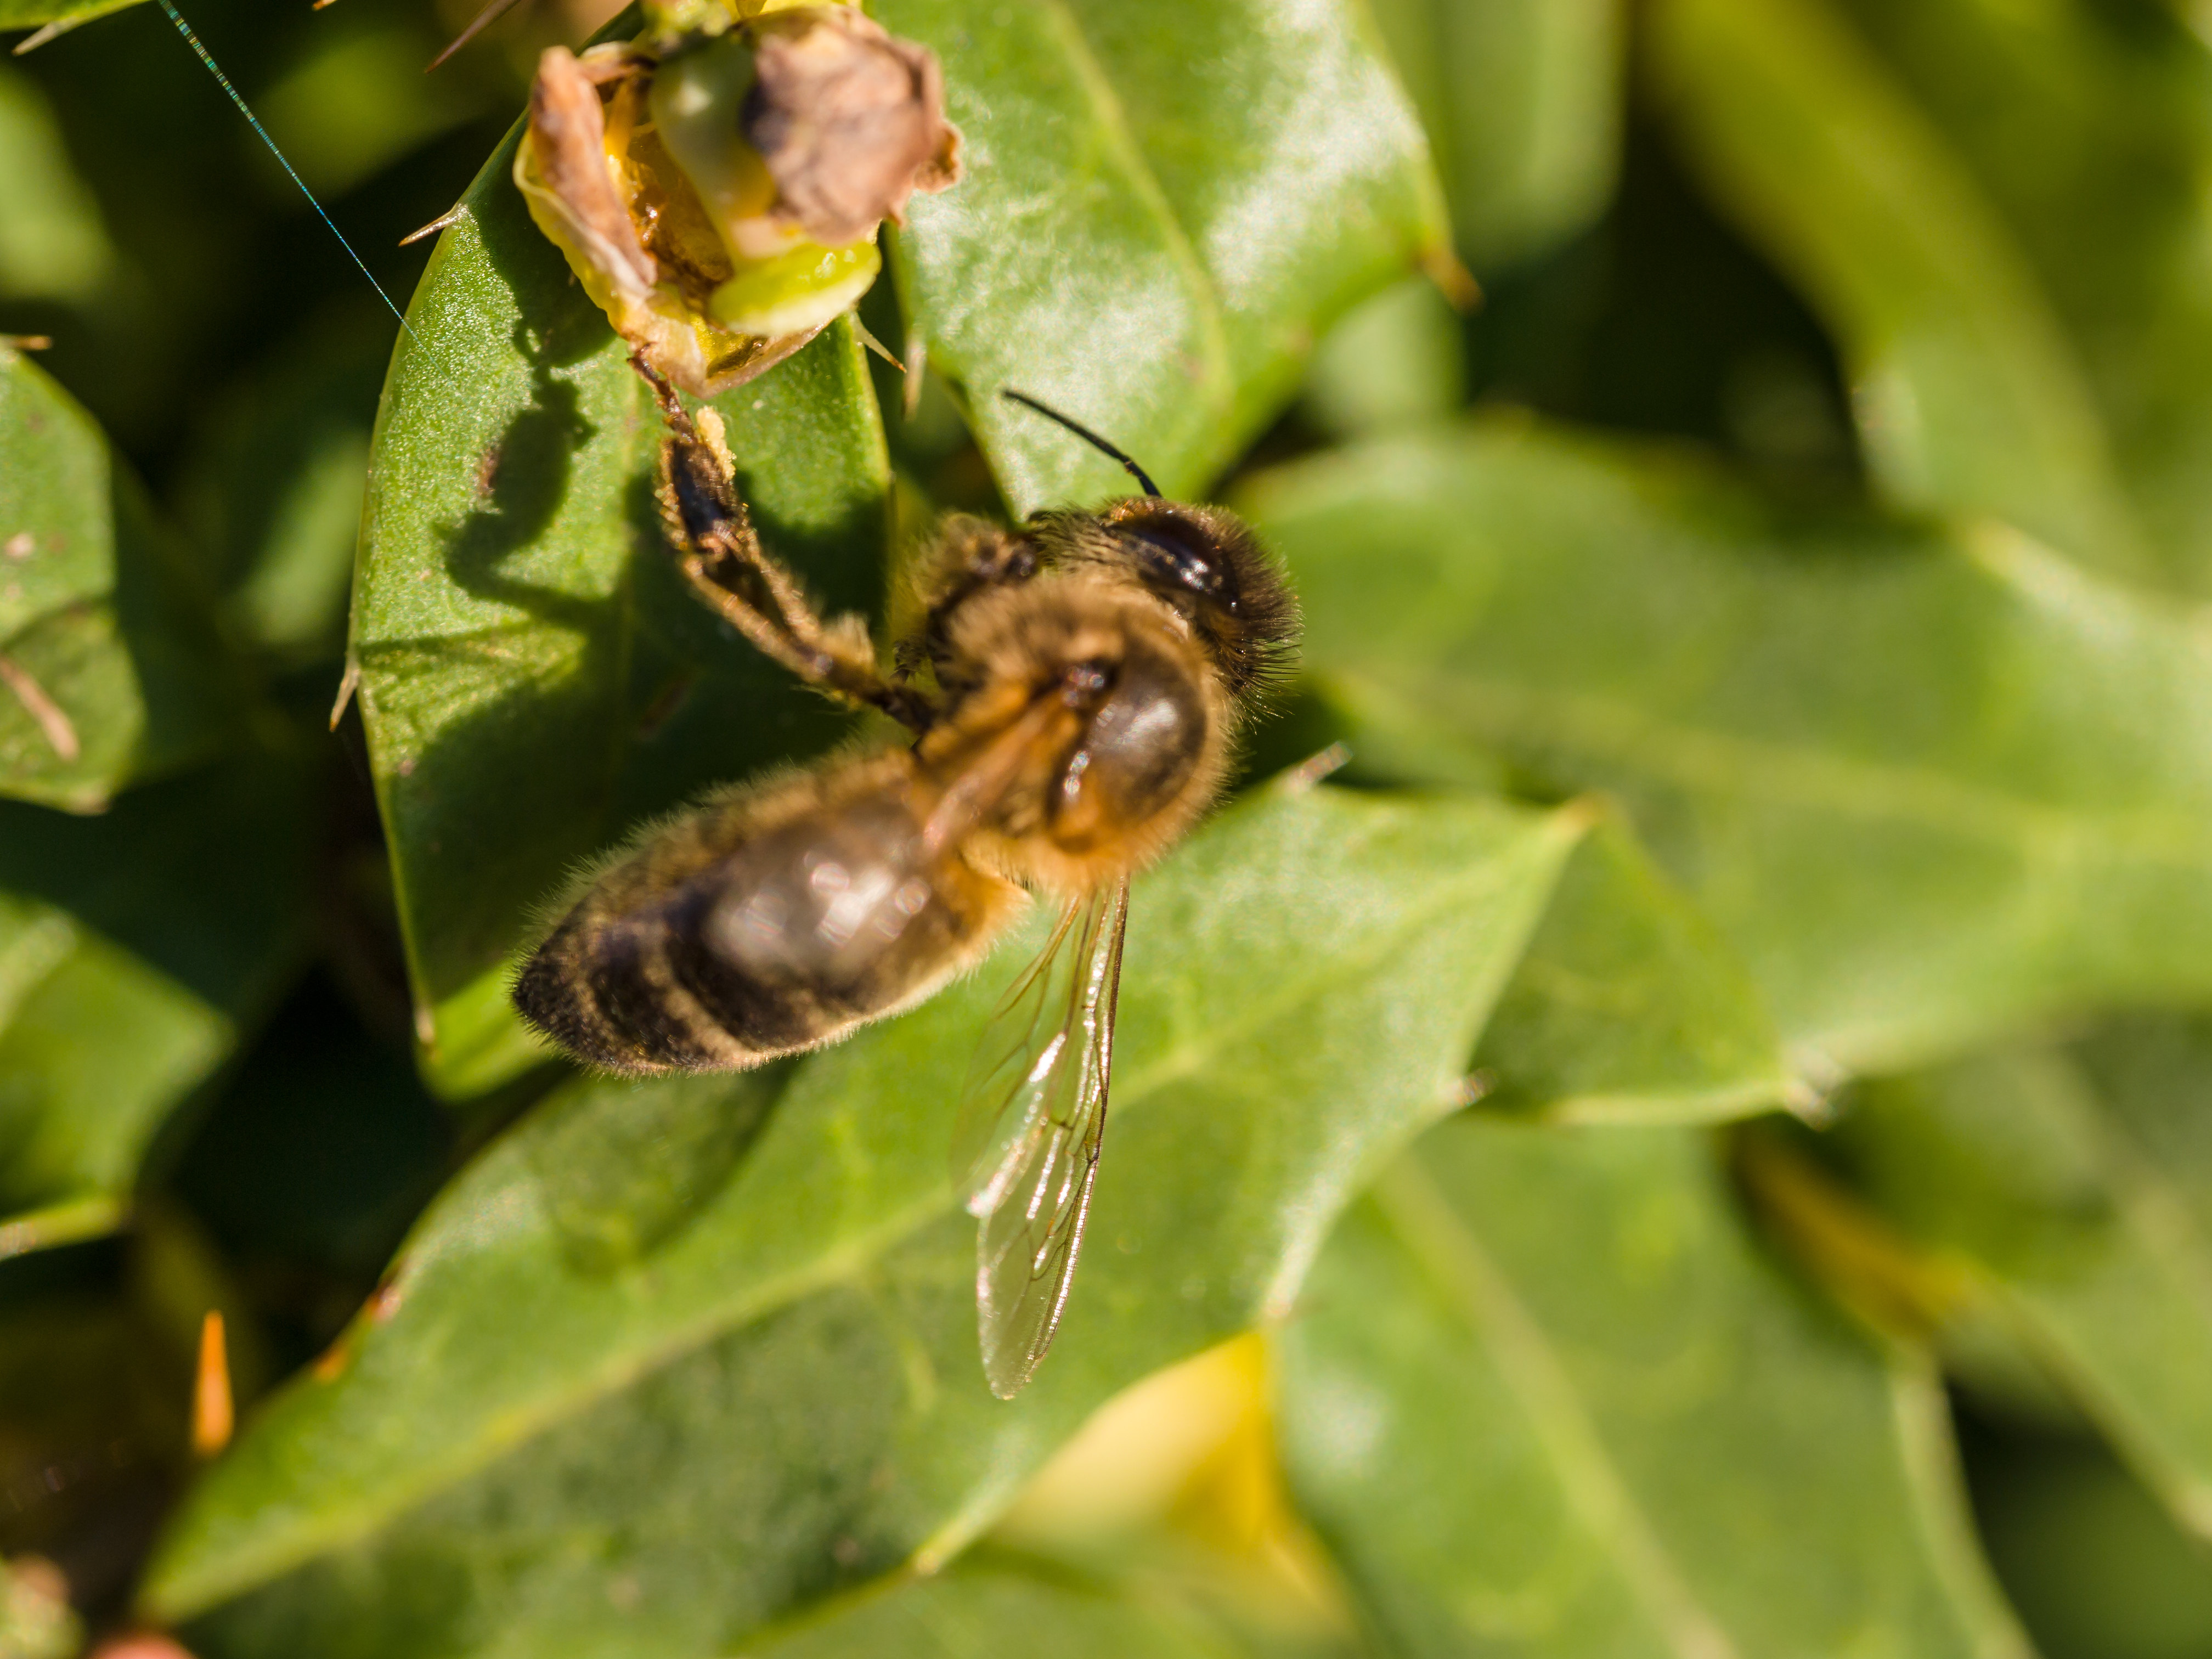 File:Bee on leaf (9055888571).jpg - Wikimedia Commons